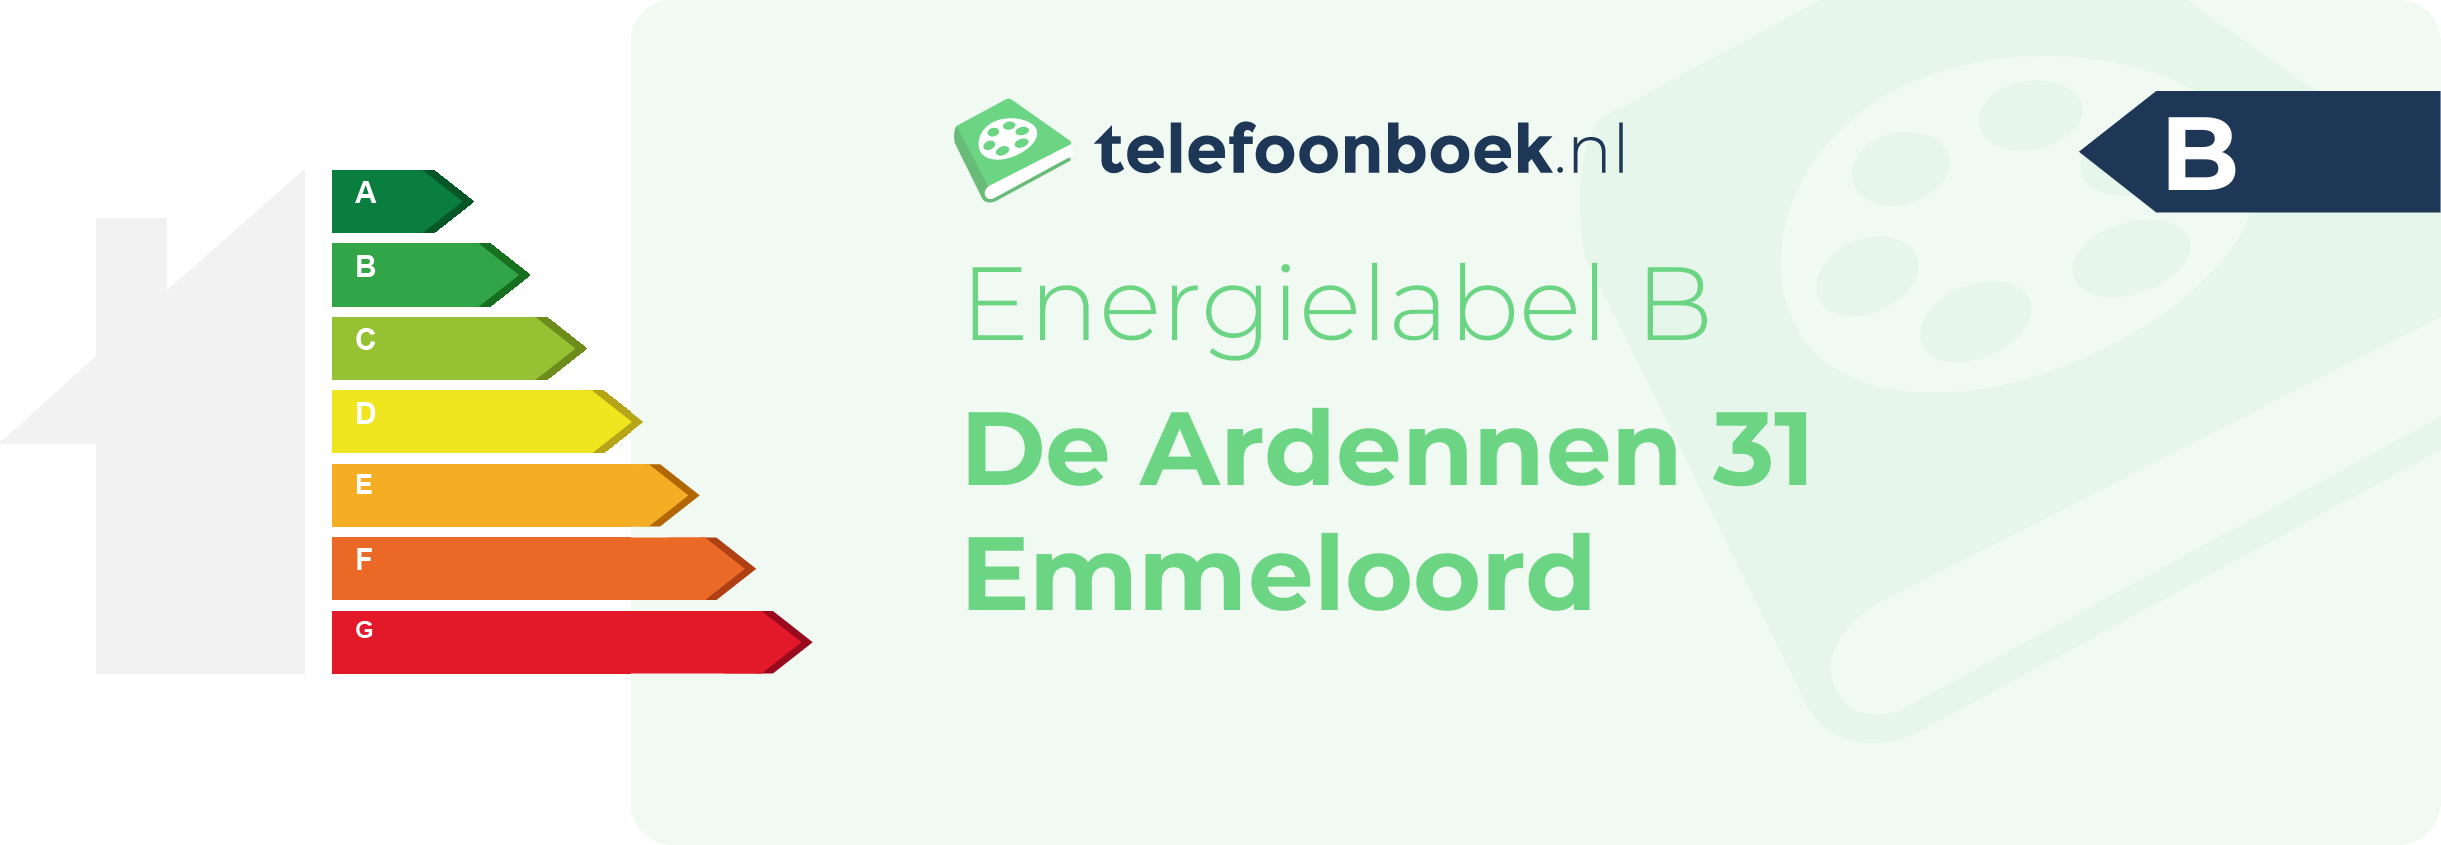 Energielabel De Ardennen 31 Emmeloord